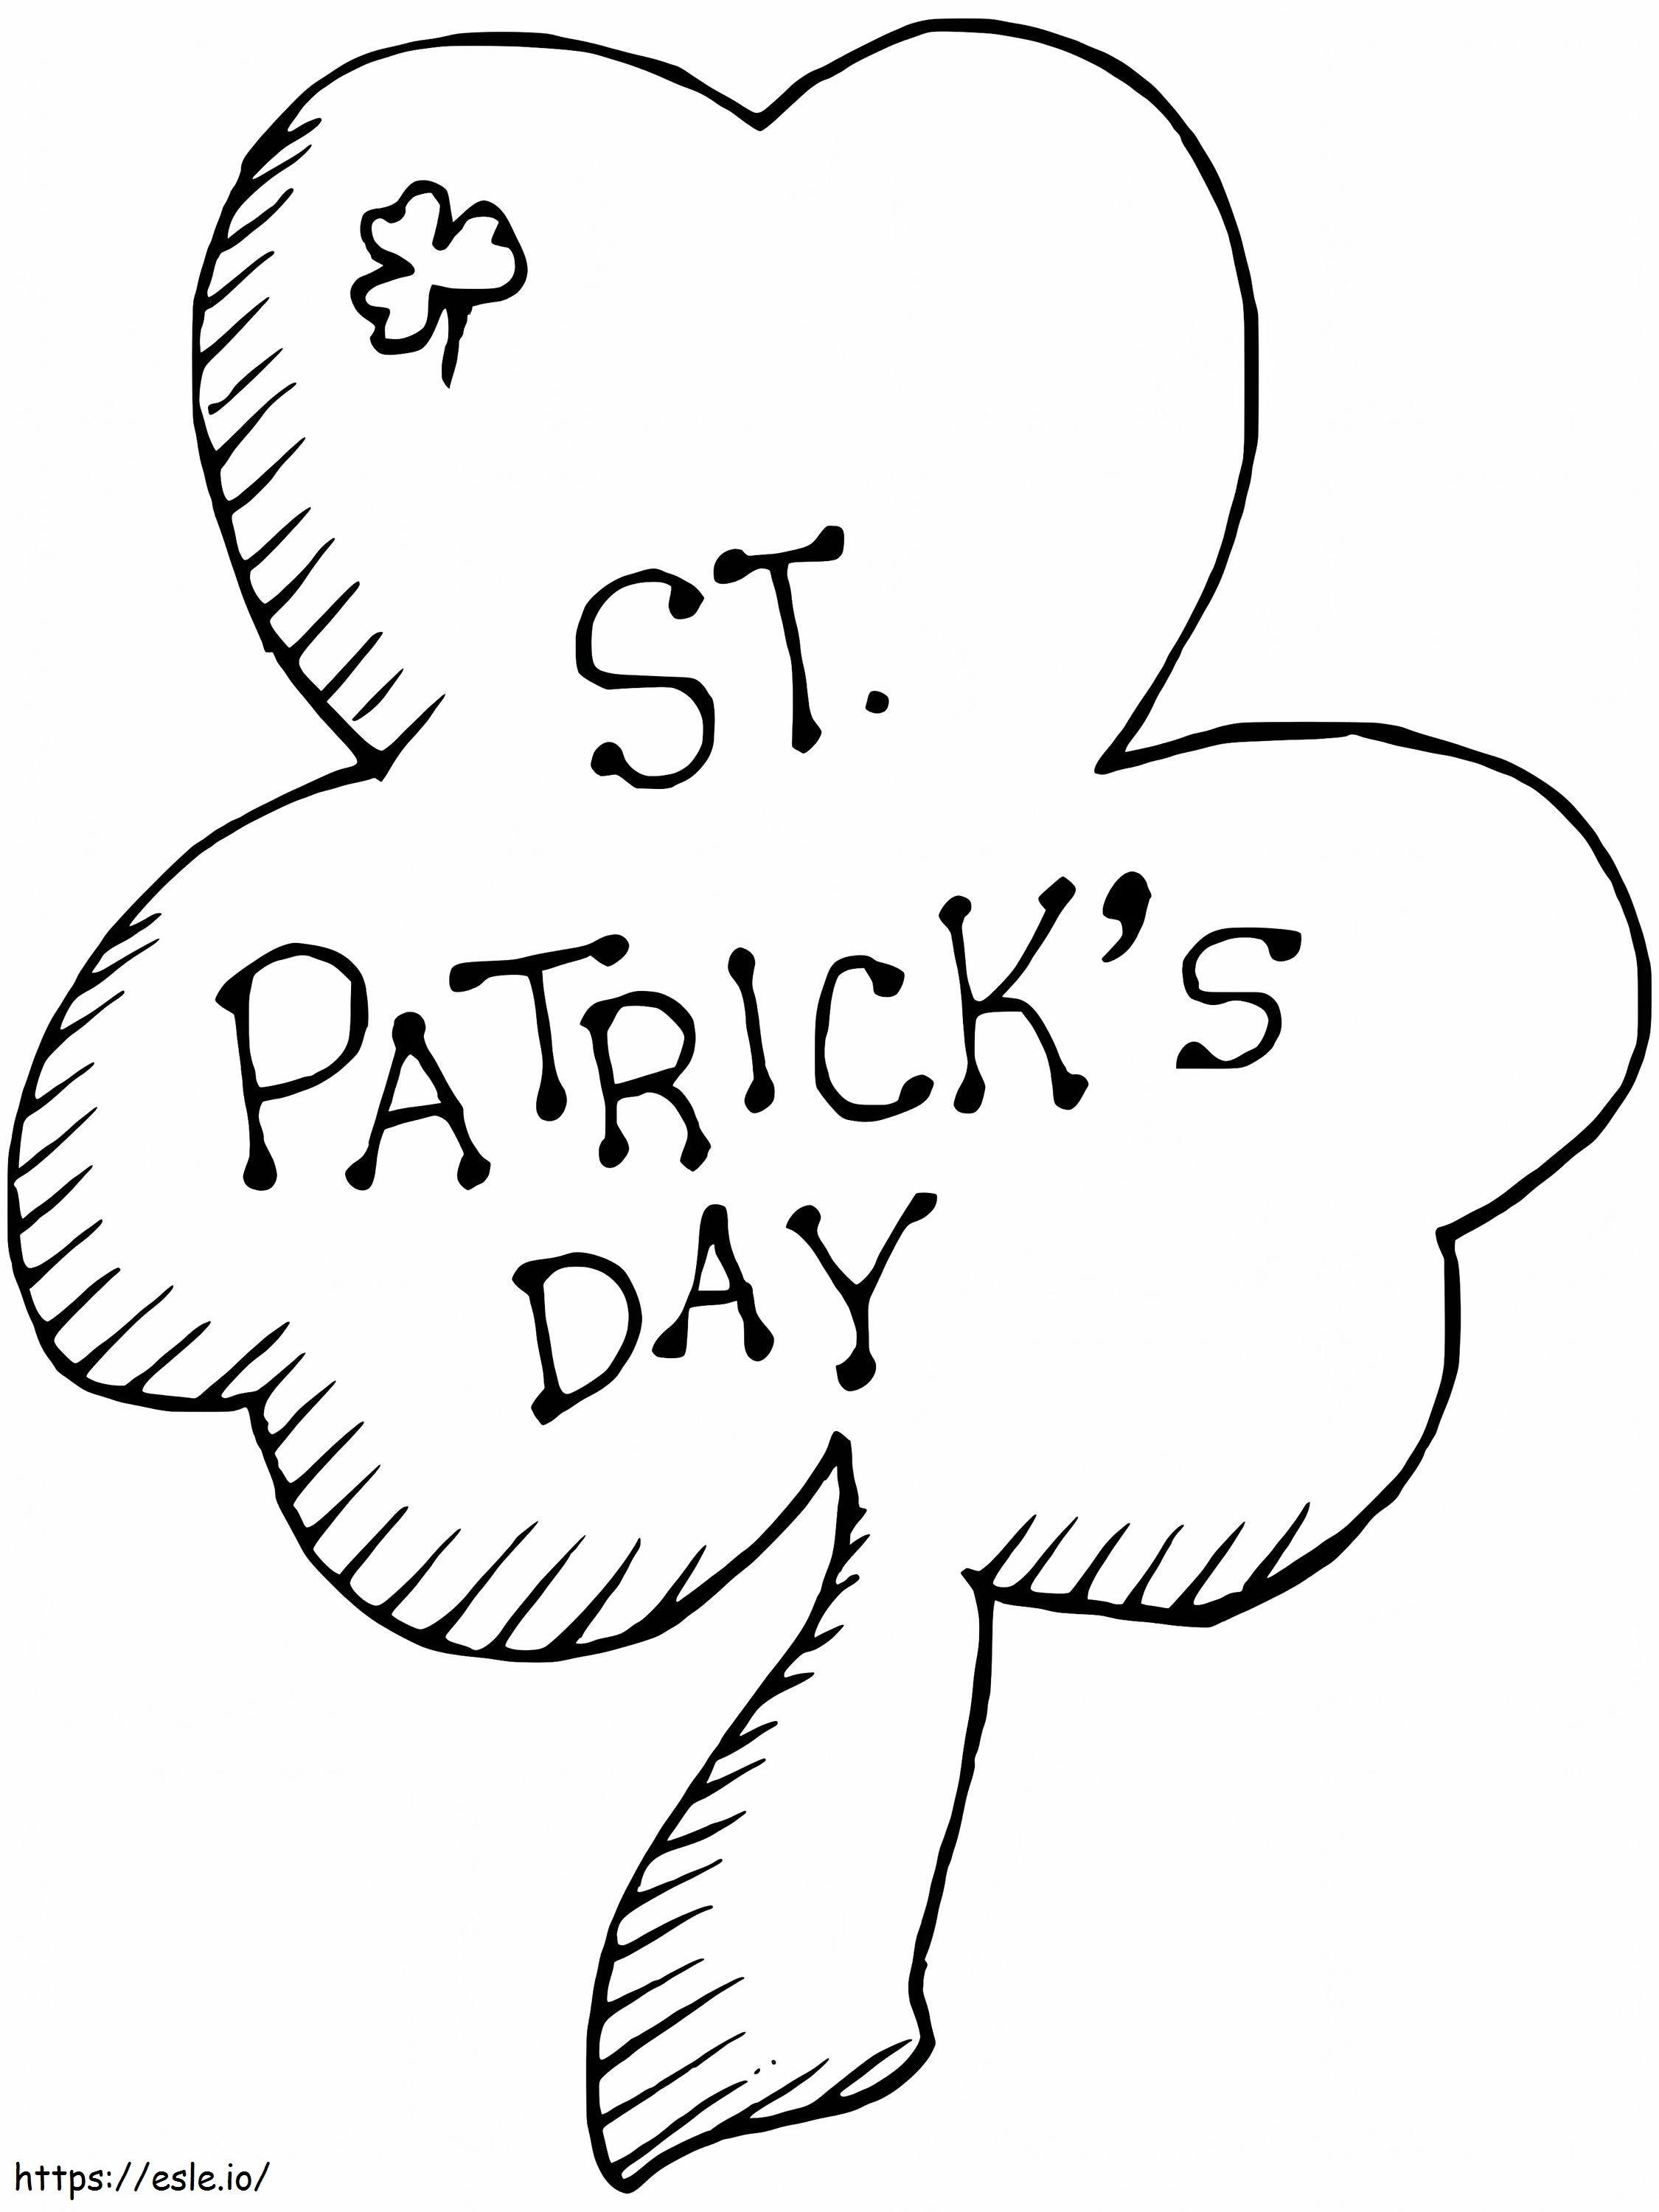 Gratis St. Patrick's Day-klaver kleurplaat kleurplaat